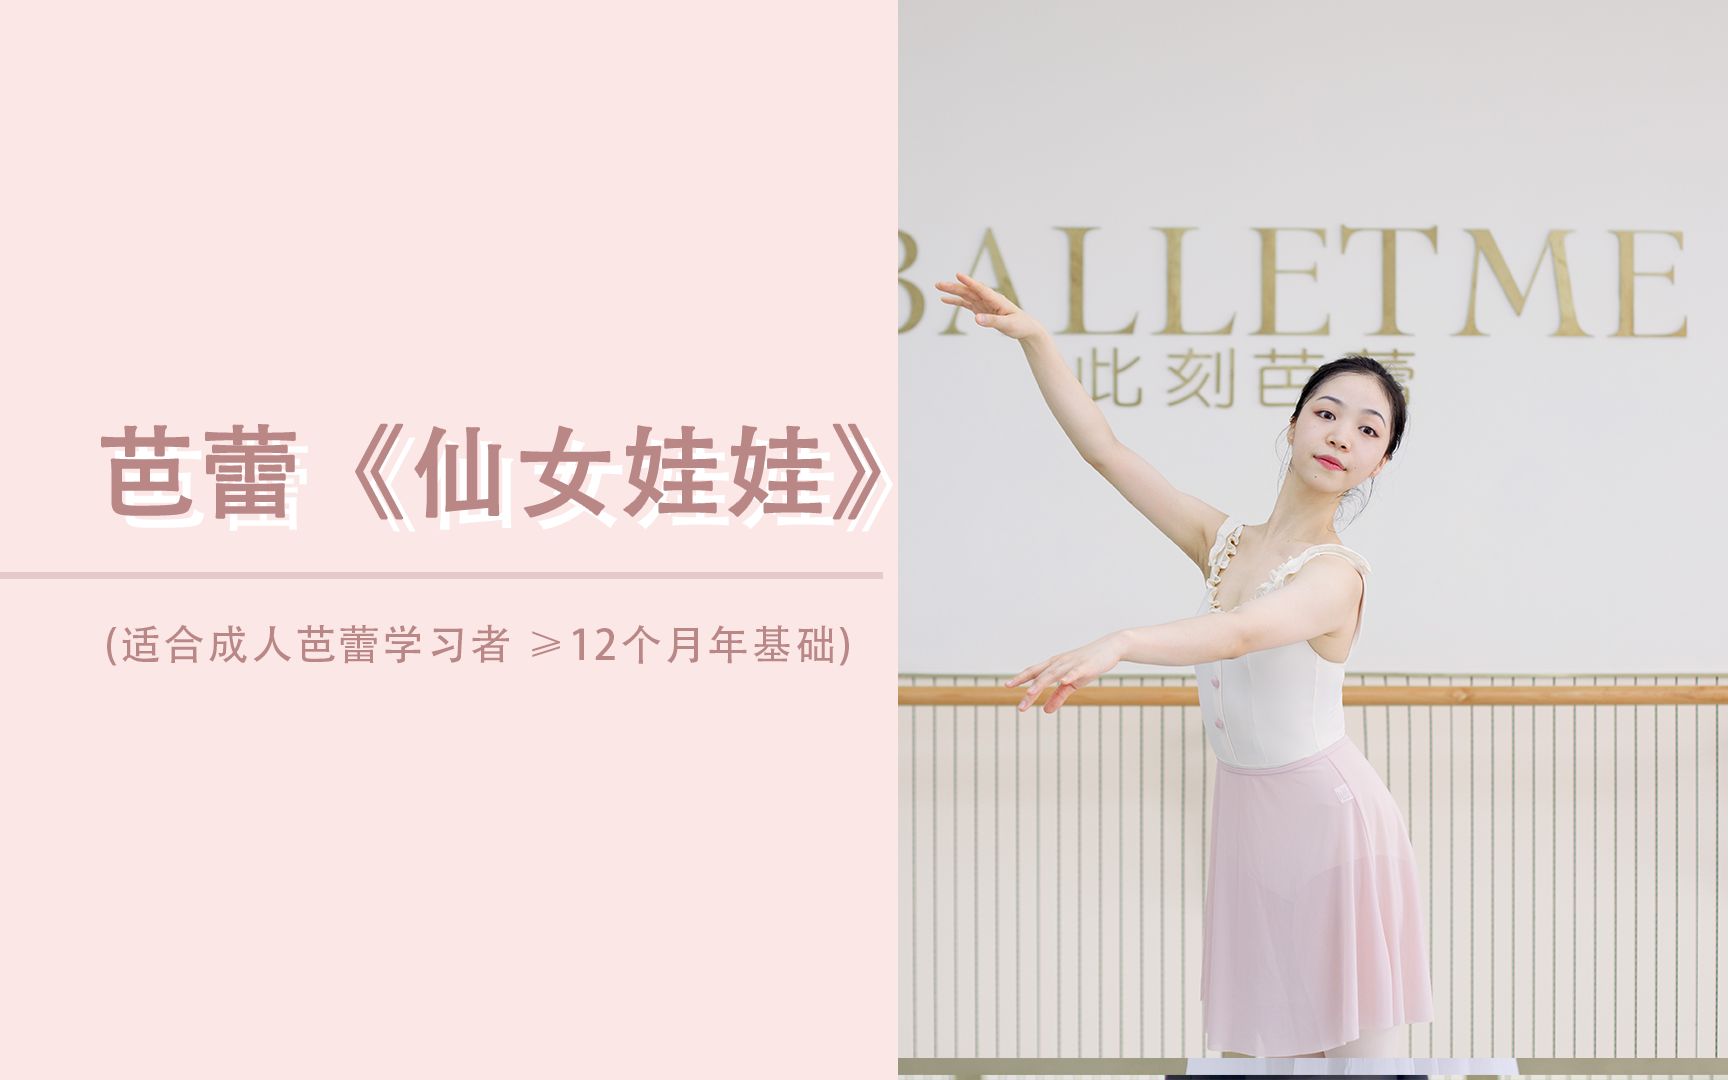 【BALLETME】芭蕾《仙女娃娃》片段(适合成人芭蕾初学者 ≥1年基础）